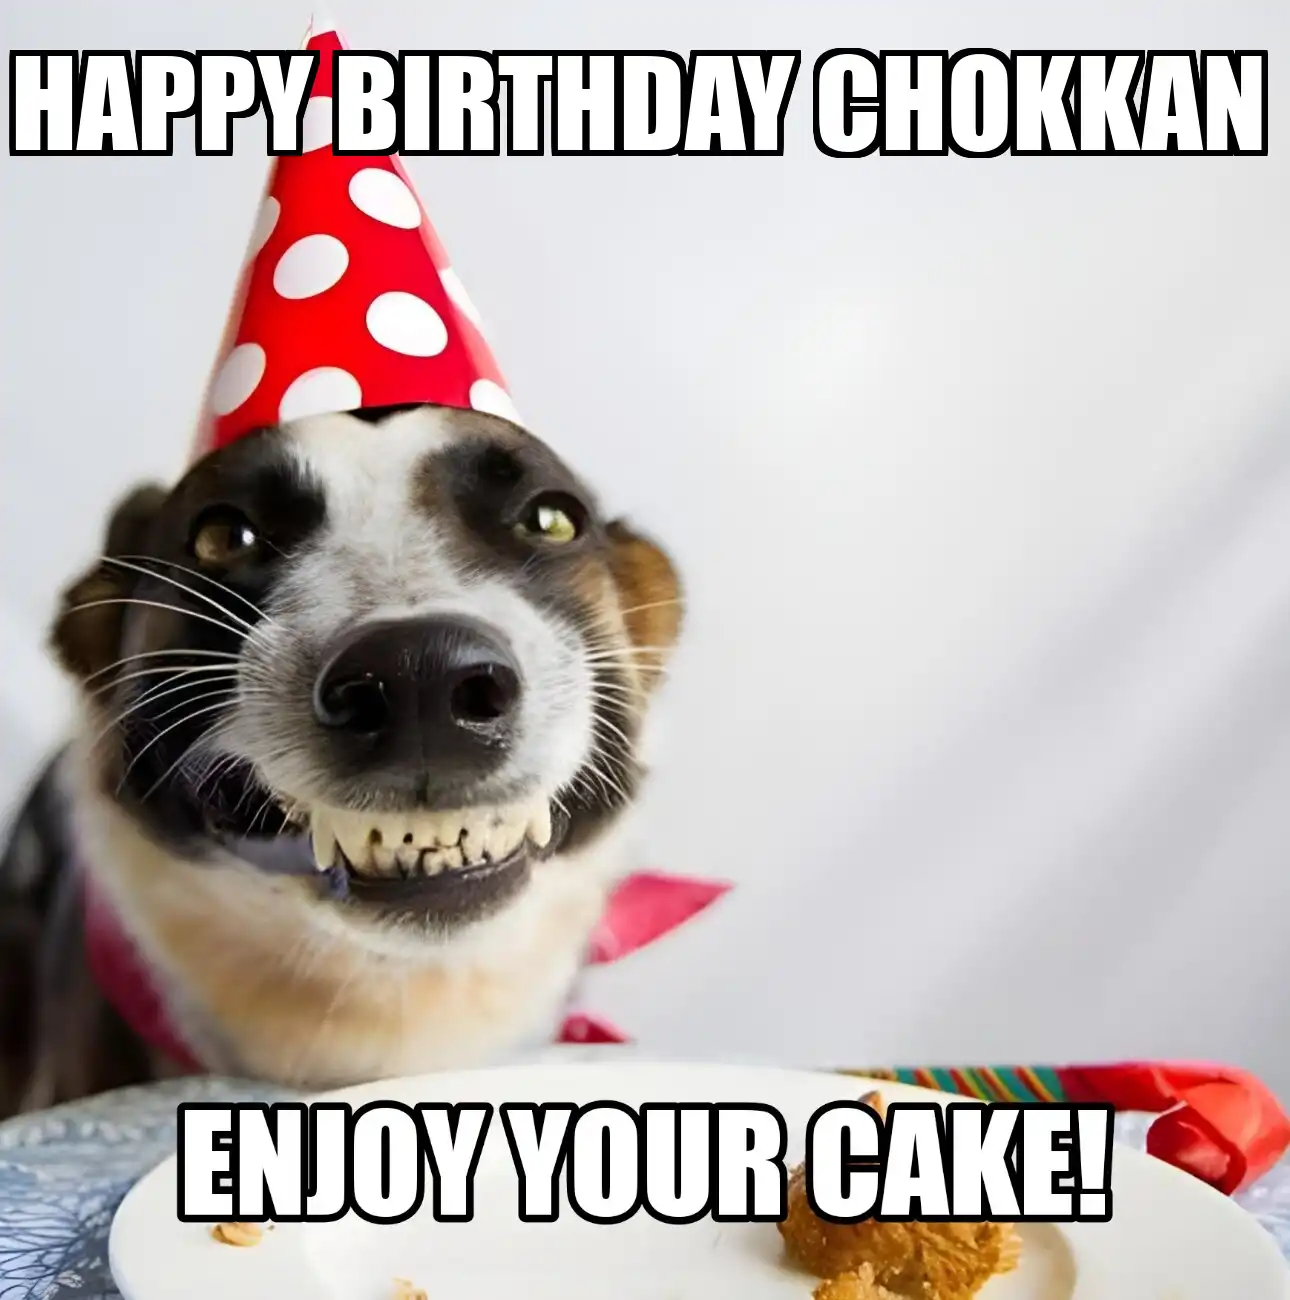 Happy Birthday Chokkan Enjoy Your Cake Dog Meme